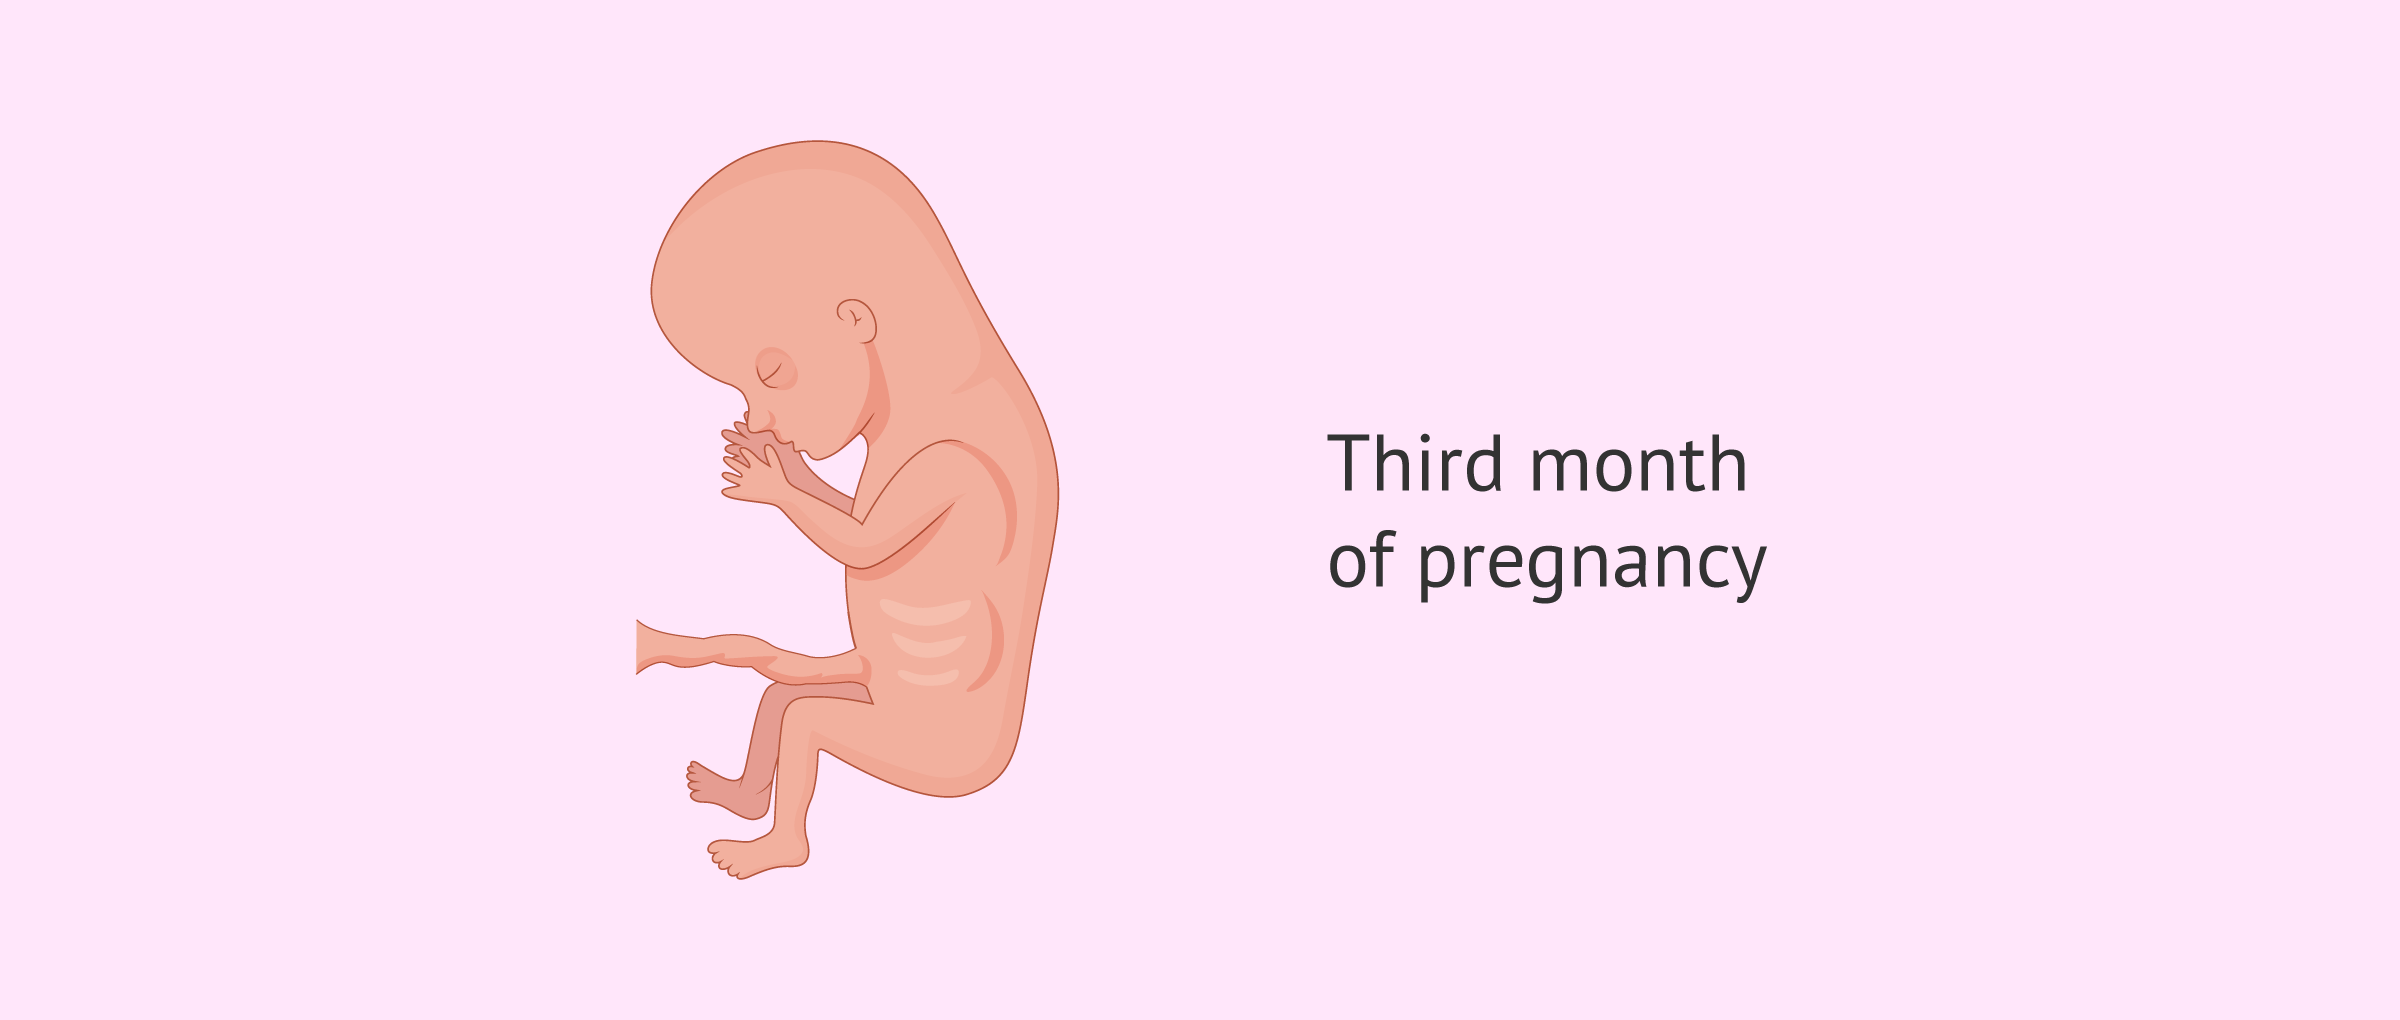 Fetus at third month of pregnancy